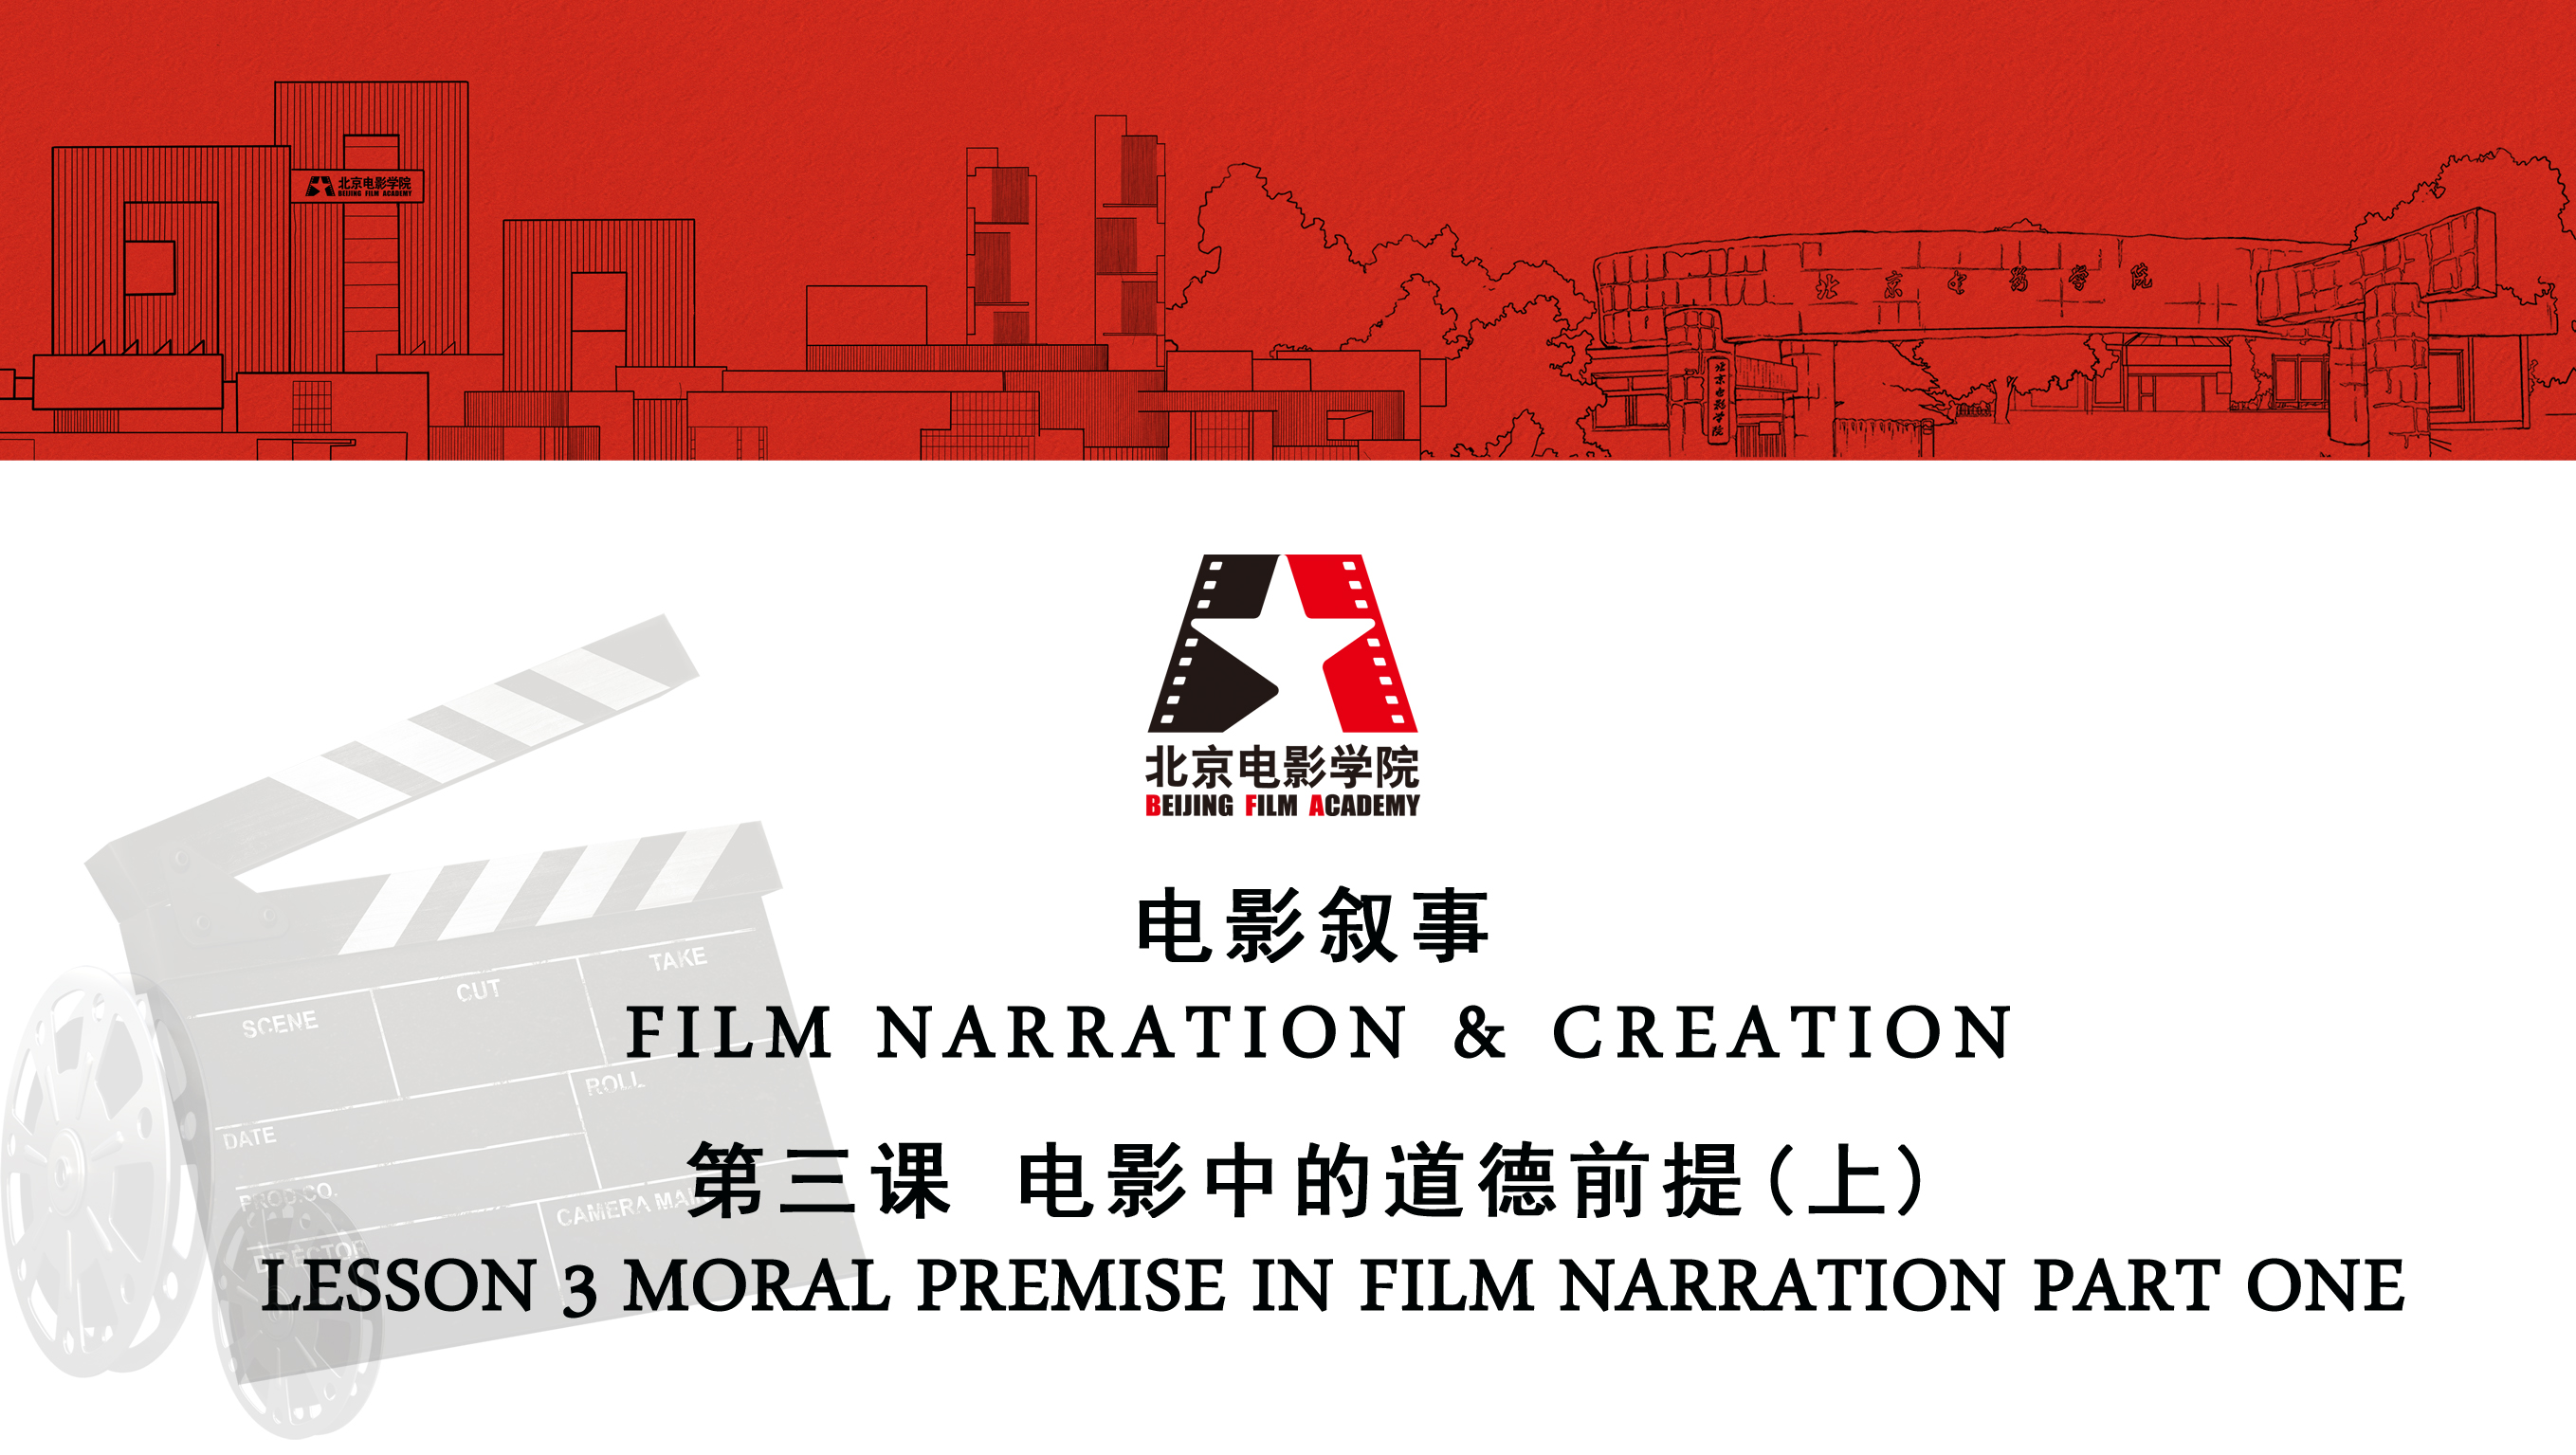 FILM NARRATION & CREATION LESSON 3 MORAL PREMISE IN FILM NARRATION PART ONE